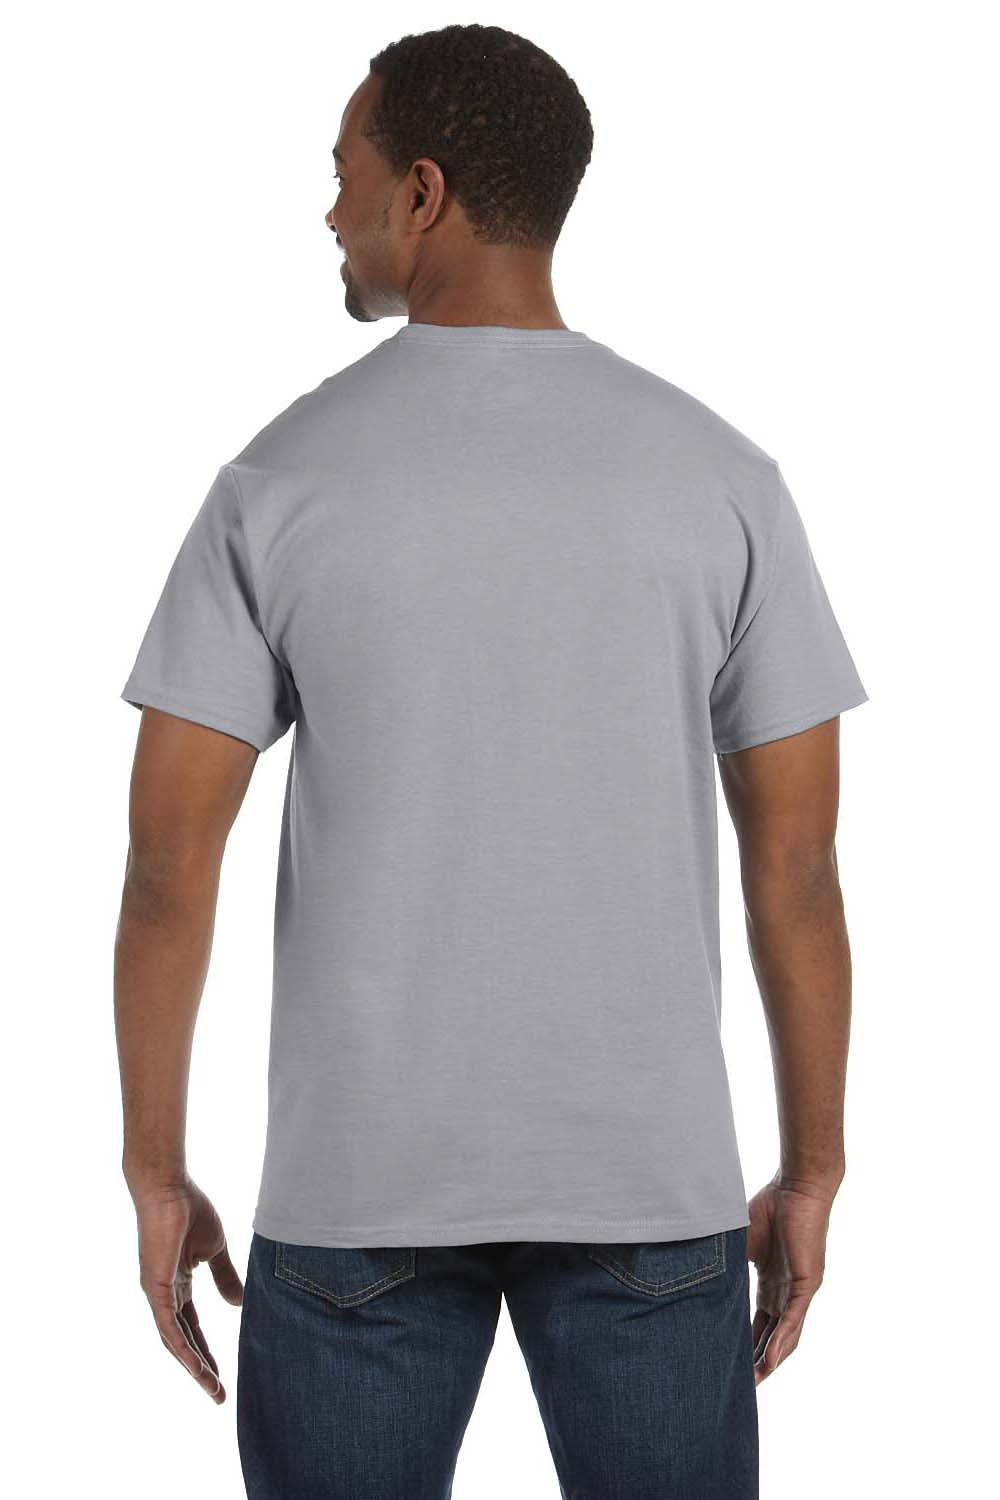 Jerzees 29M Mens Dri-Power Moisture Wicking Short Sleeve Crewneck T-Shirt Oxford Grey Back